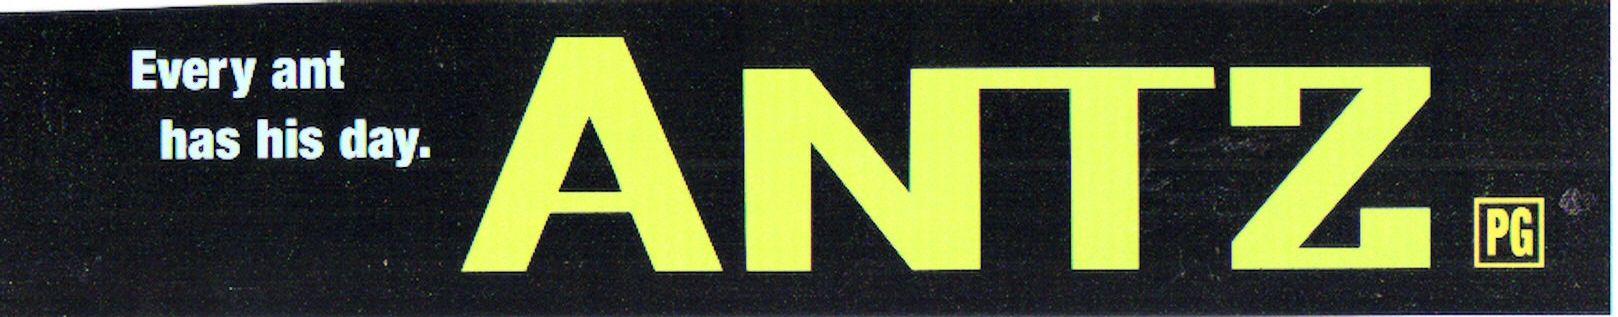 Antz Logo - Antz Movie Title Banner. Posters and Prints